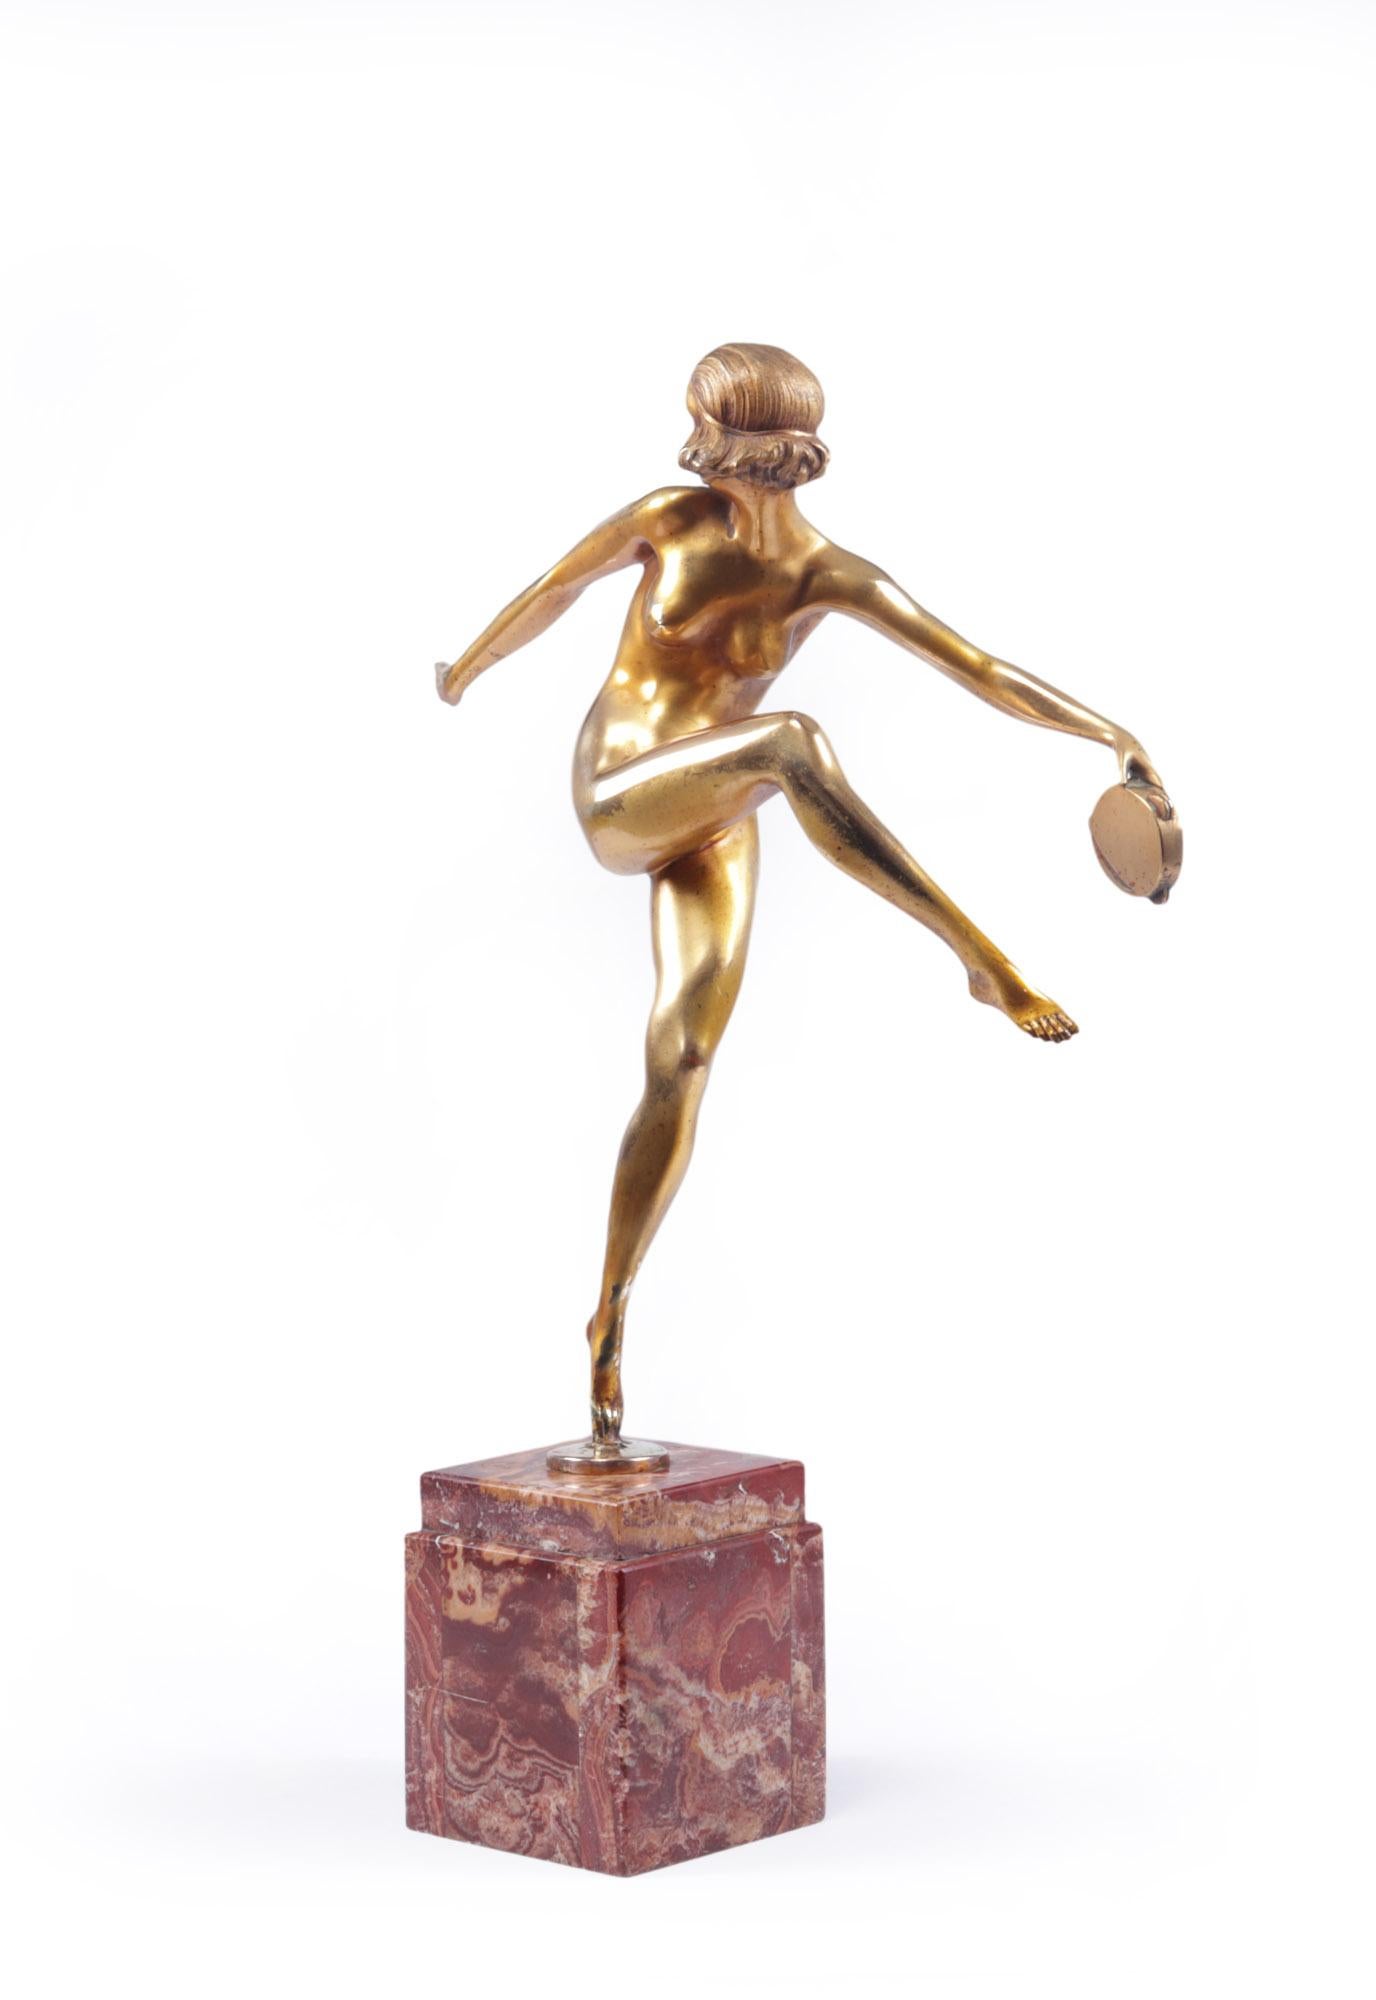 French Art Deco Gilt Bronze Sculpture “Tamborine Dancer” by Feguays c1925